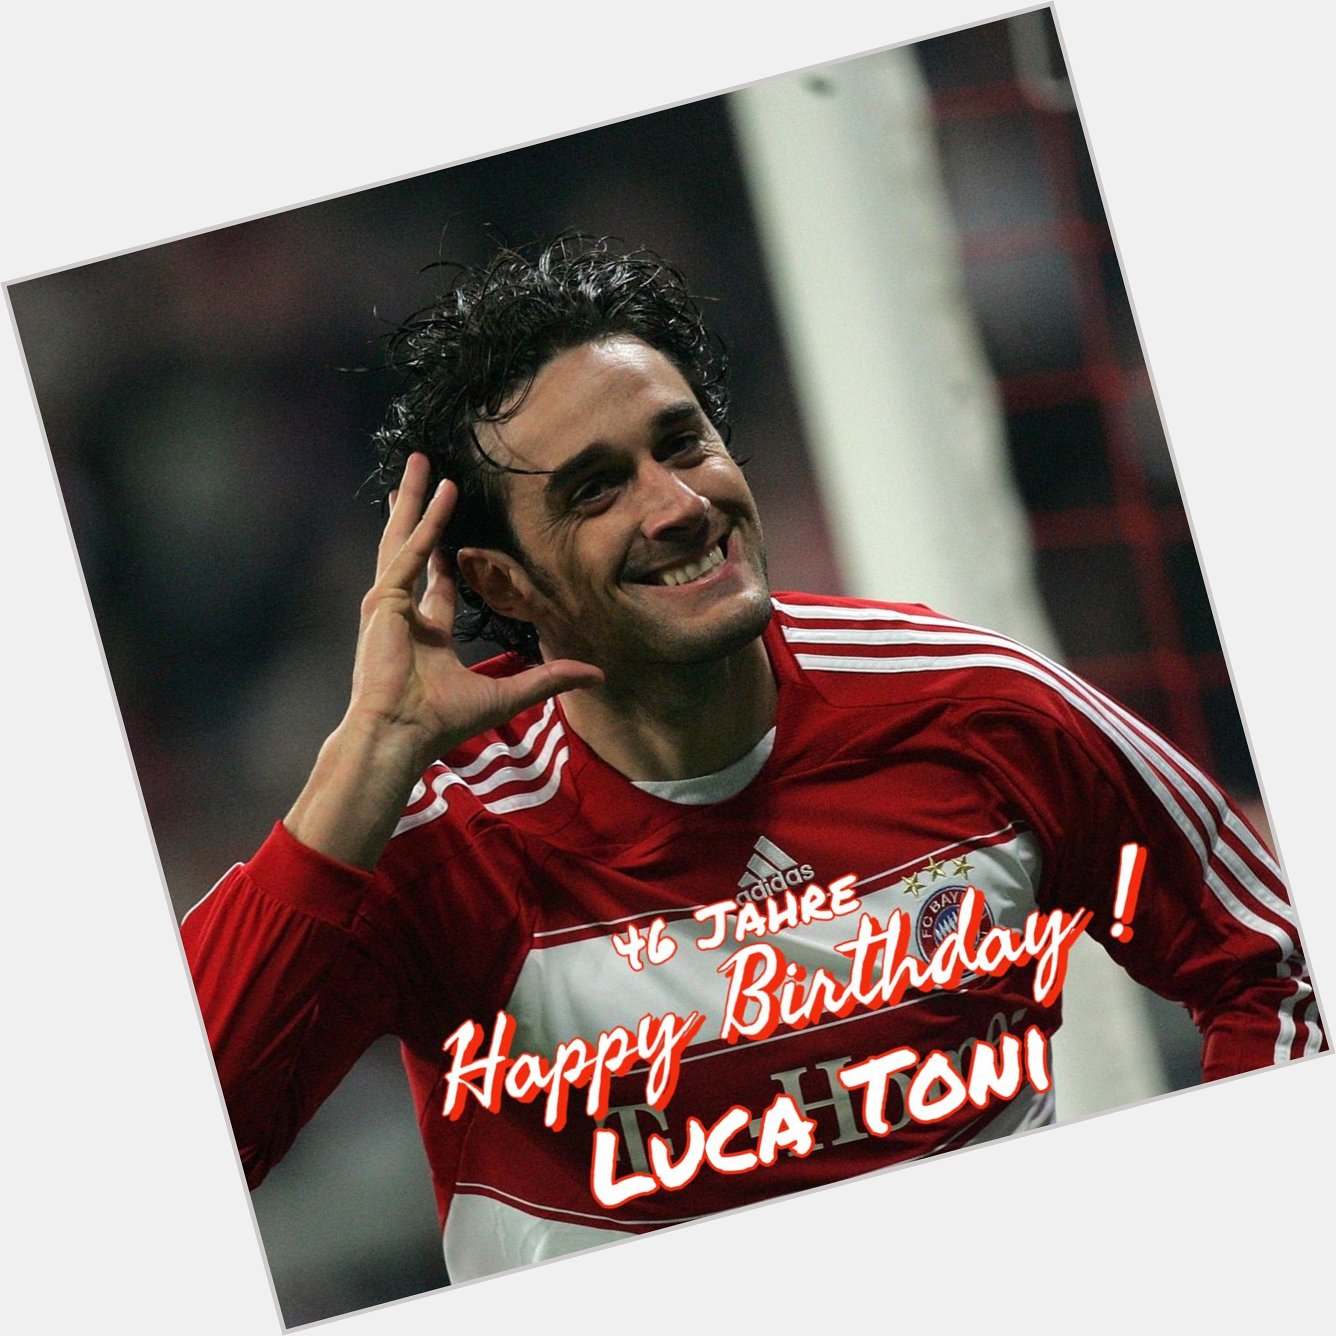 Luca Toni feiert heute seinen 46. Geburtstag.

Happy Birthday ! 